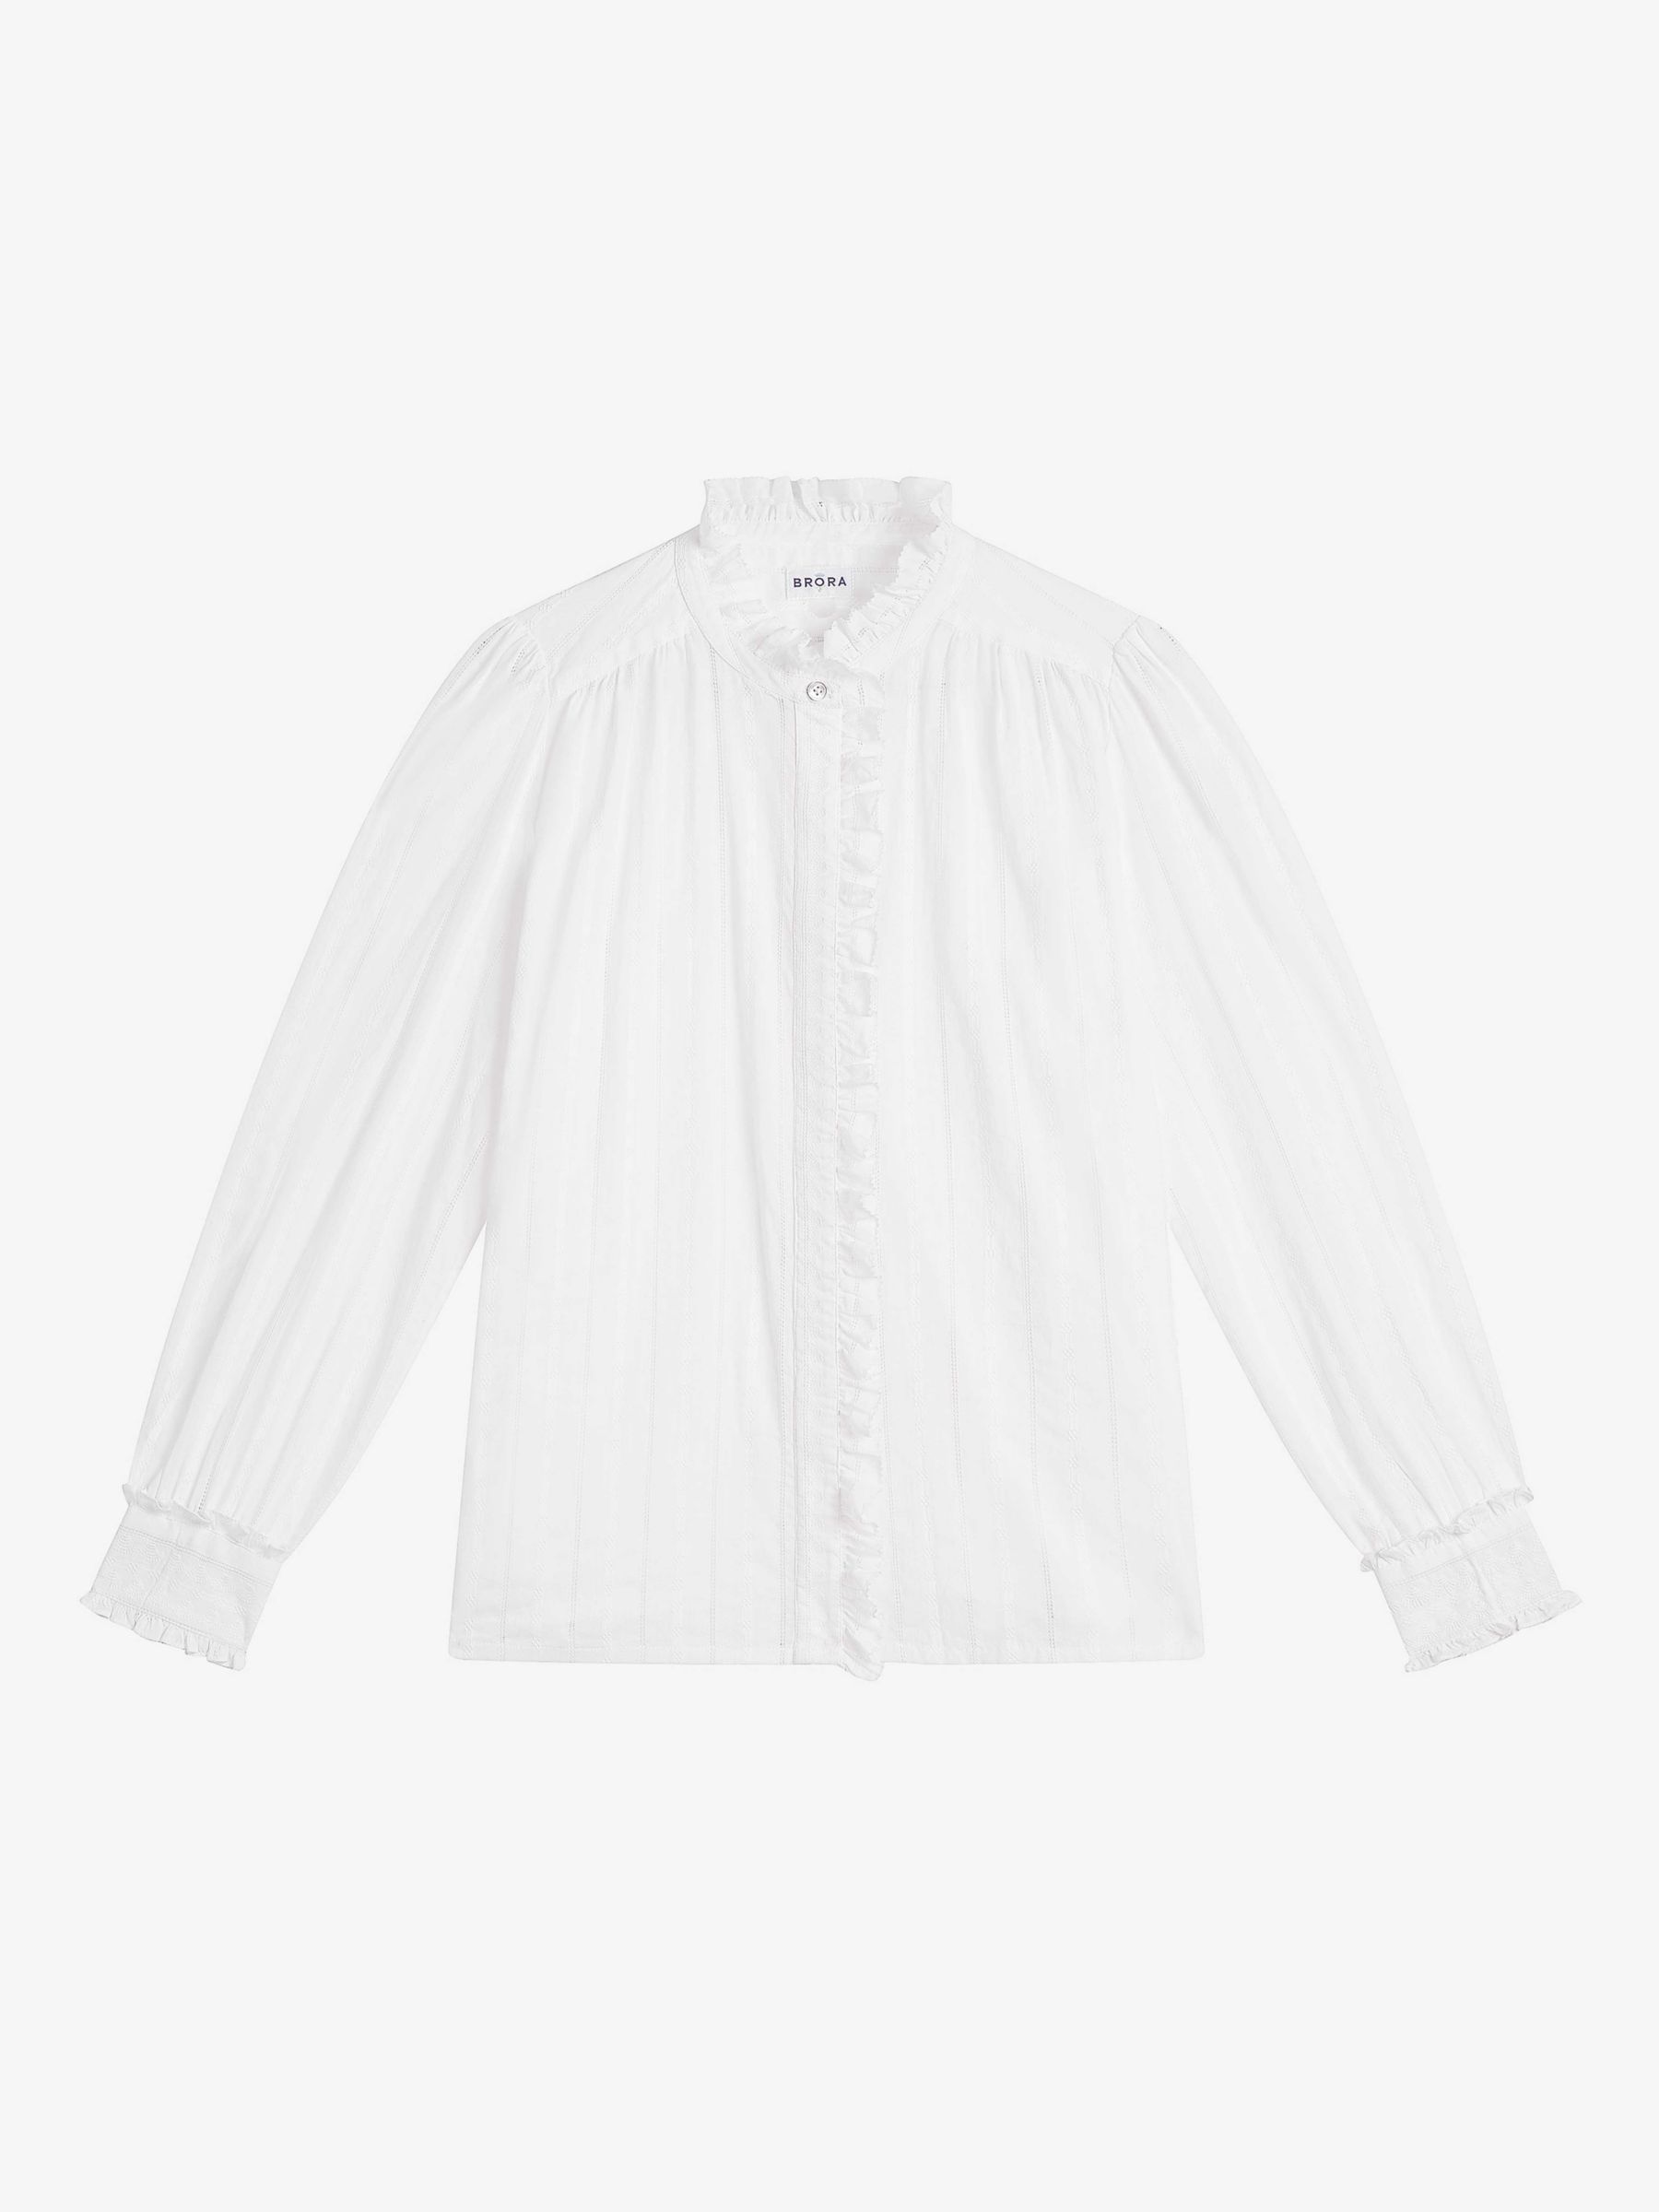 Brora Organic Cotton Frill Shirt, White, 6